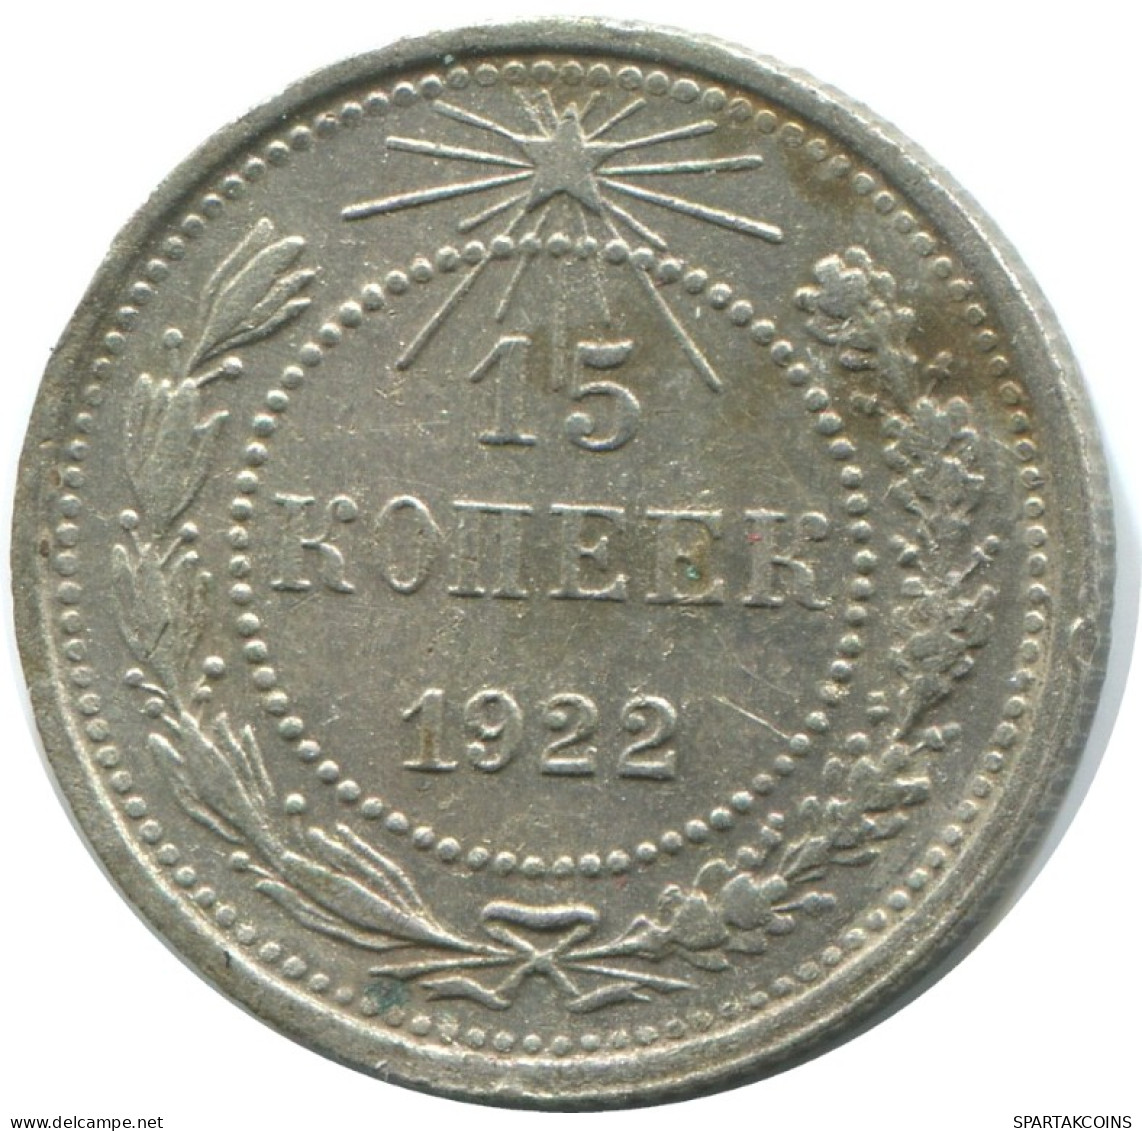 15 KOPEKS 1922 RUSSIA RSFSR SILVER Coin HIGH GRADE #AF175.4.U.A - Rusia